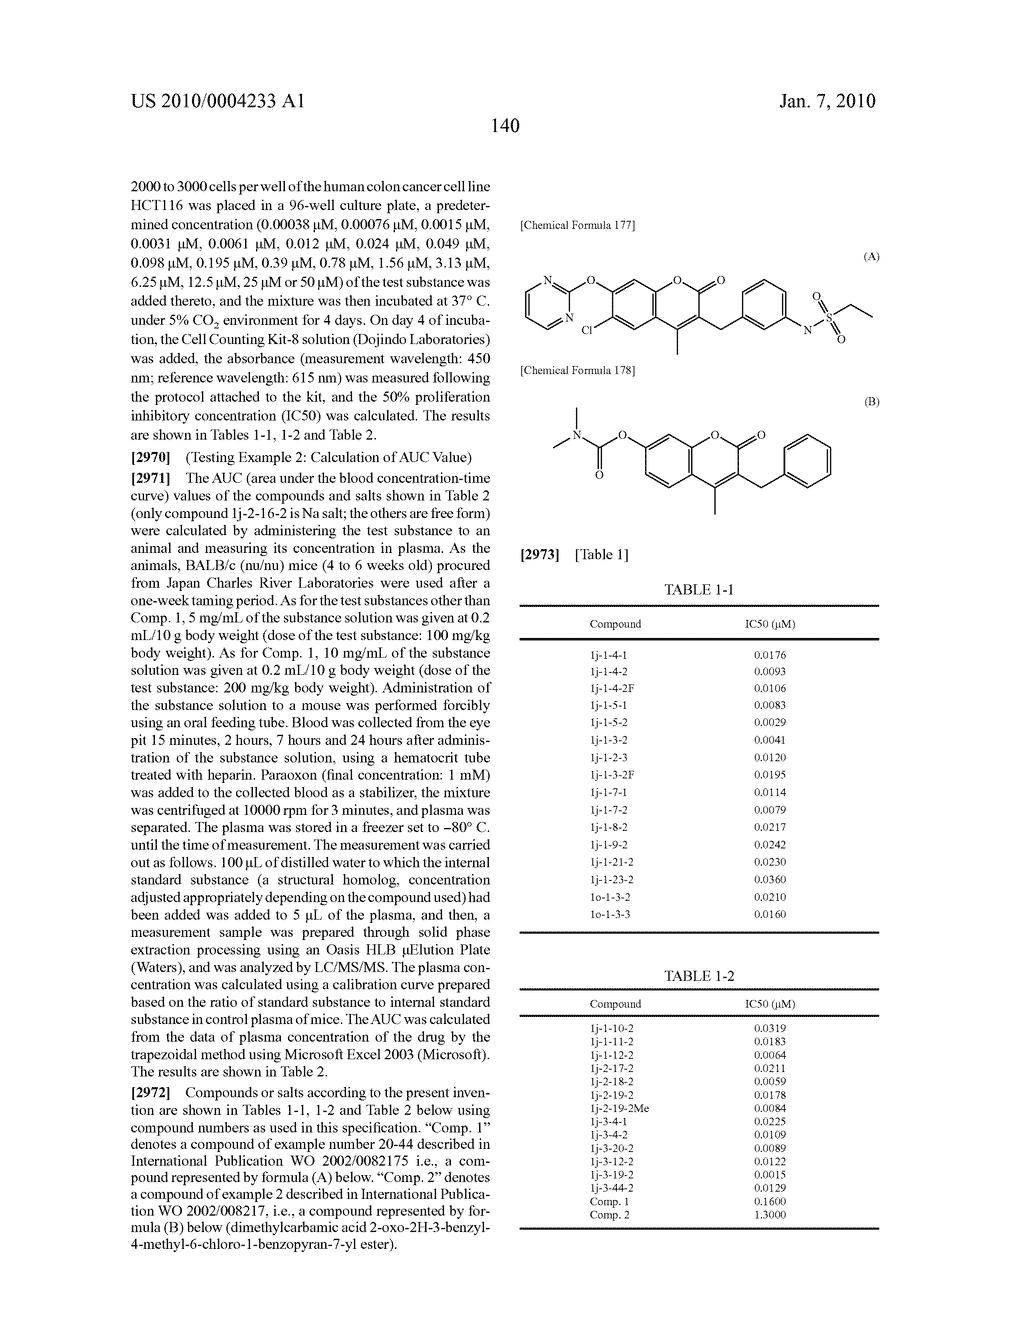 NOVEL COUMARIN DERIVATIVE HAVING ANTITUMOR ACTIVITY - diagram, schematic, and image 141